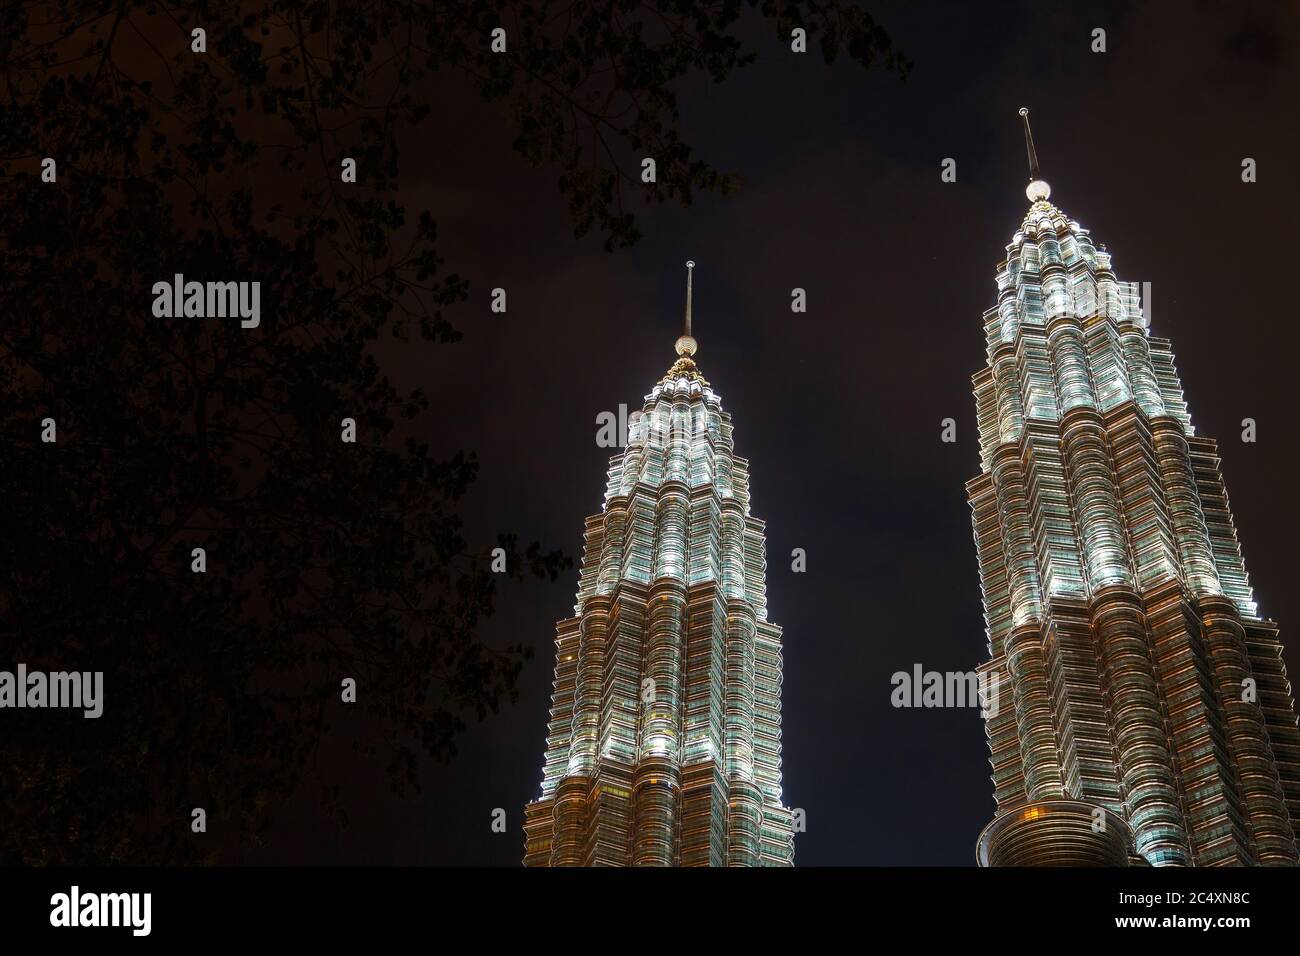 Kuala Lumpur, Malesia - CIRCA 2017: Vista notturna delle Torri KLCC o Petronas, note anche come le Torri Gemelle Petronas sono grattacieli gemelli a Kuala Lumpu Foto Stock